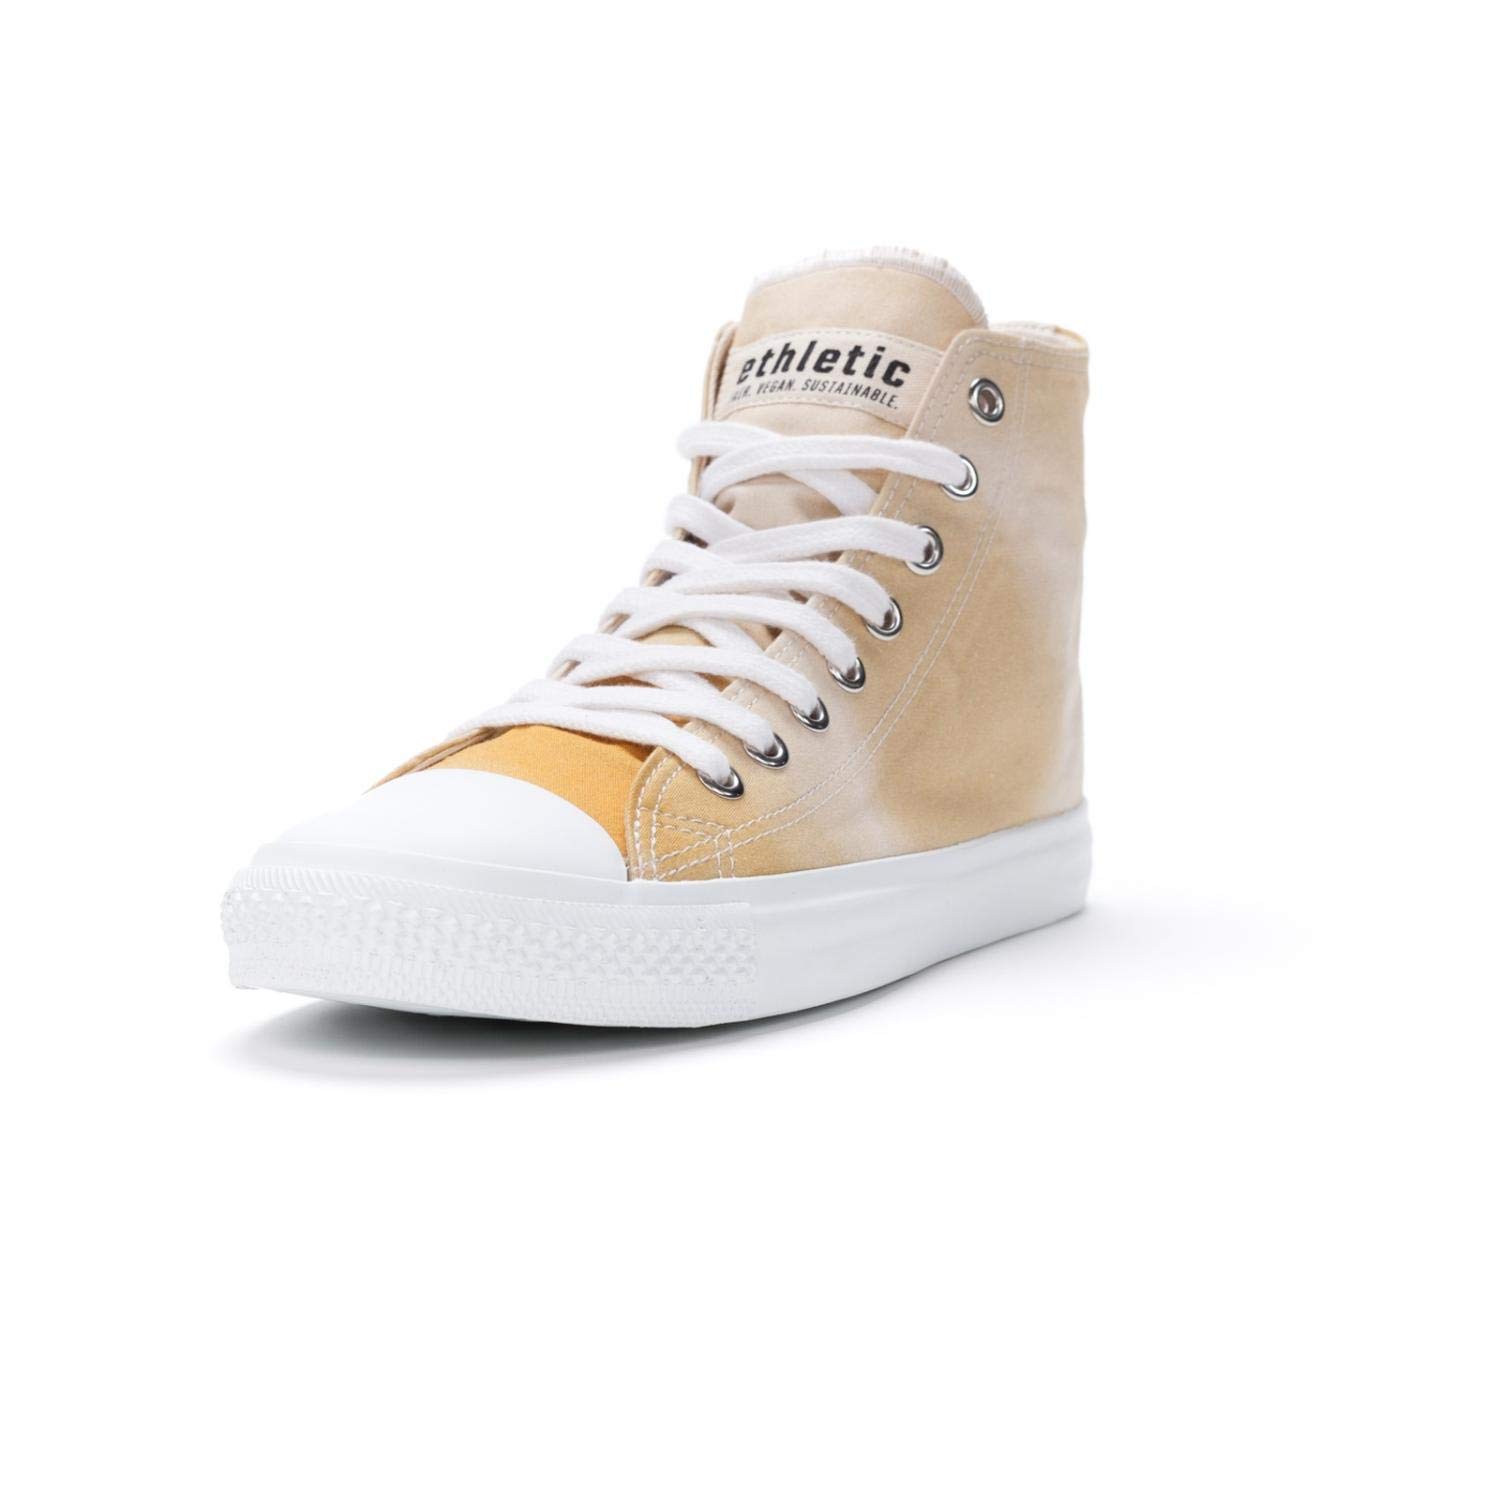 Ethletic Unisex Fair Trainer White Cap Hi Cut Sneaker, Golden Shine Just White, 42 EU